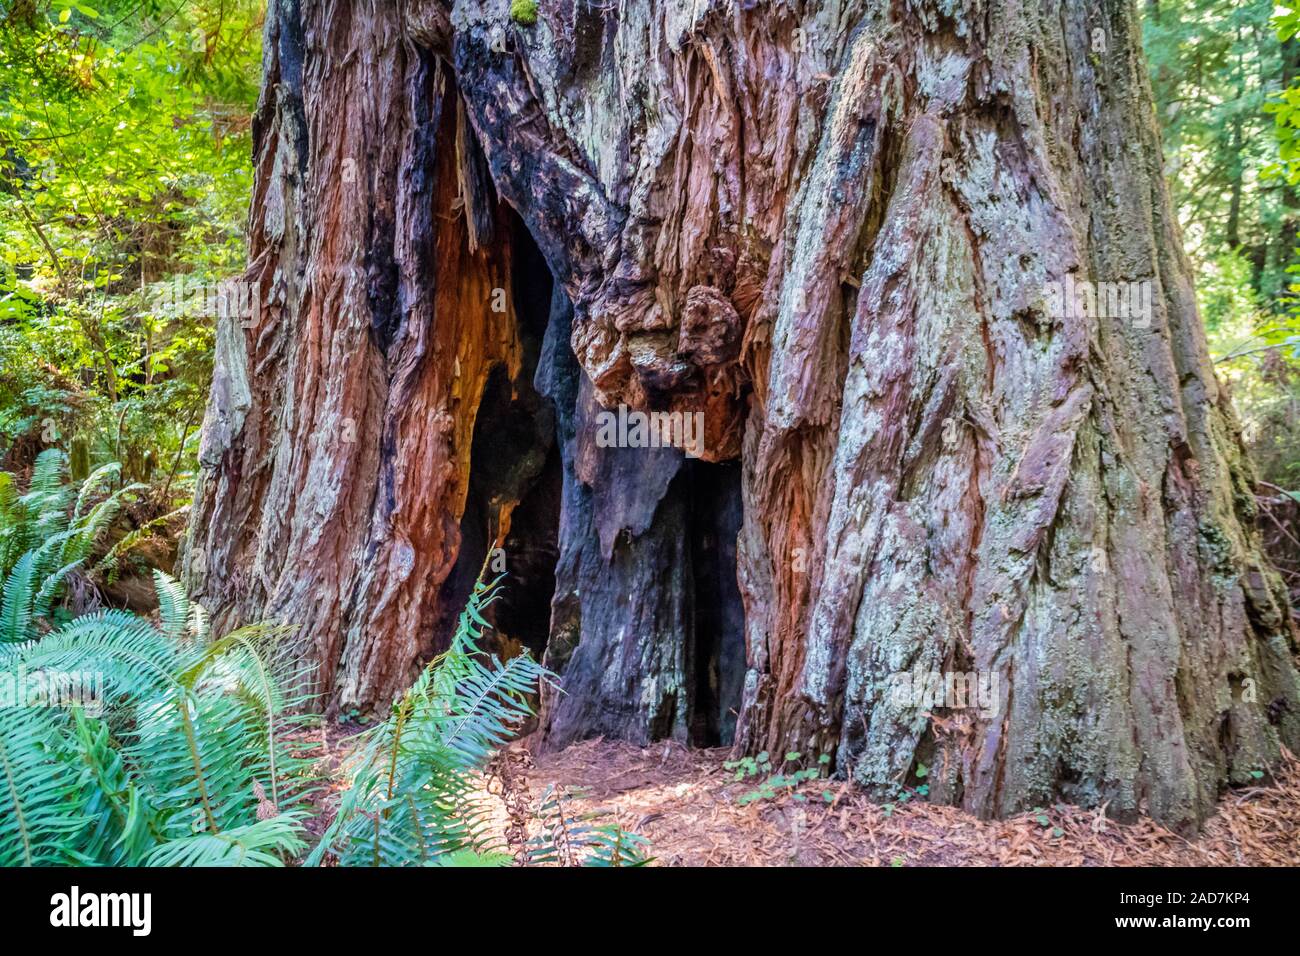 Giant Sequoia Baum im Redwoods National and State Parks - Kalifornien Stockfoto